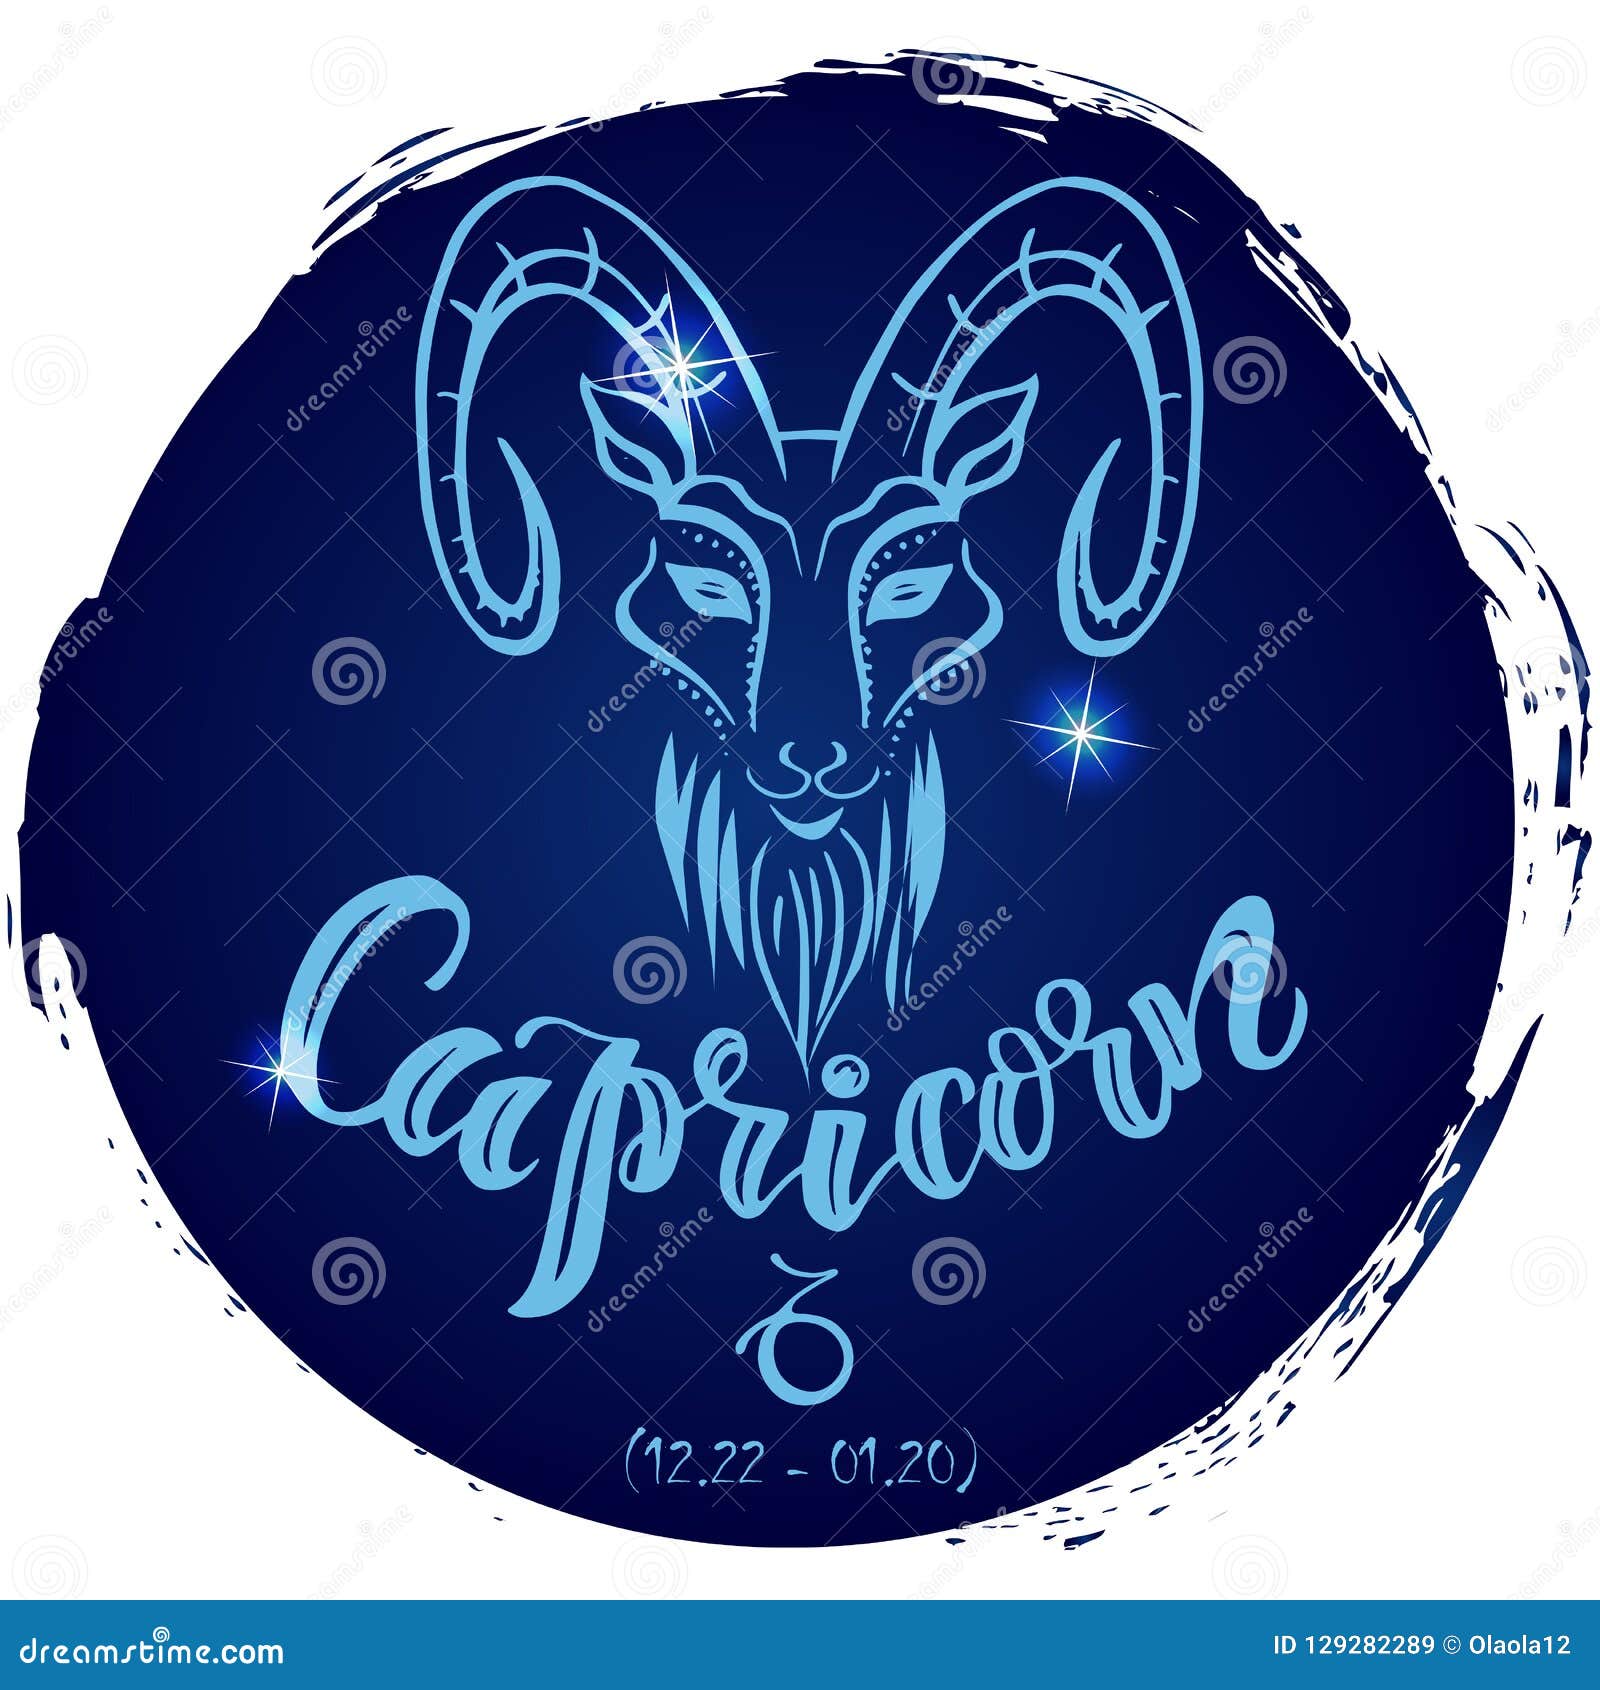 Sign Capricorn Astrologic Infographics Stock Image | CartoonDealer.com ...